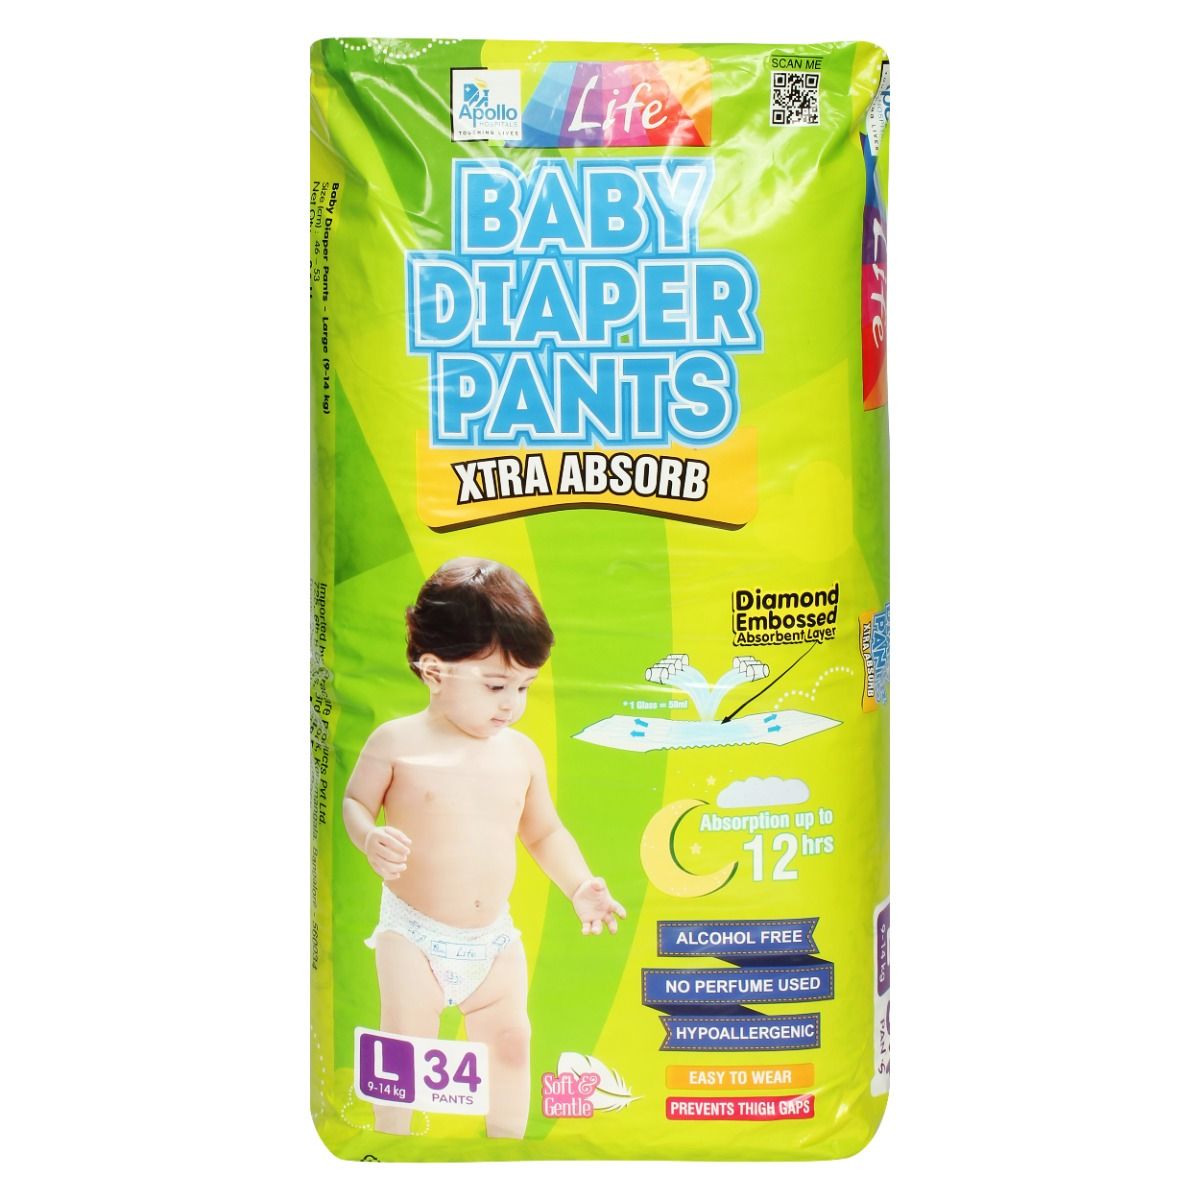 Buy Apollo Life Baby Diaper Pants Large, 34 Count Online